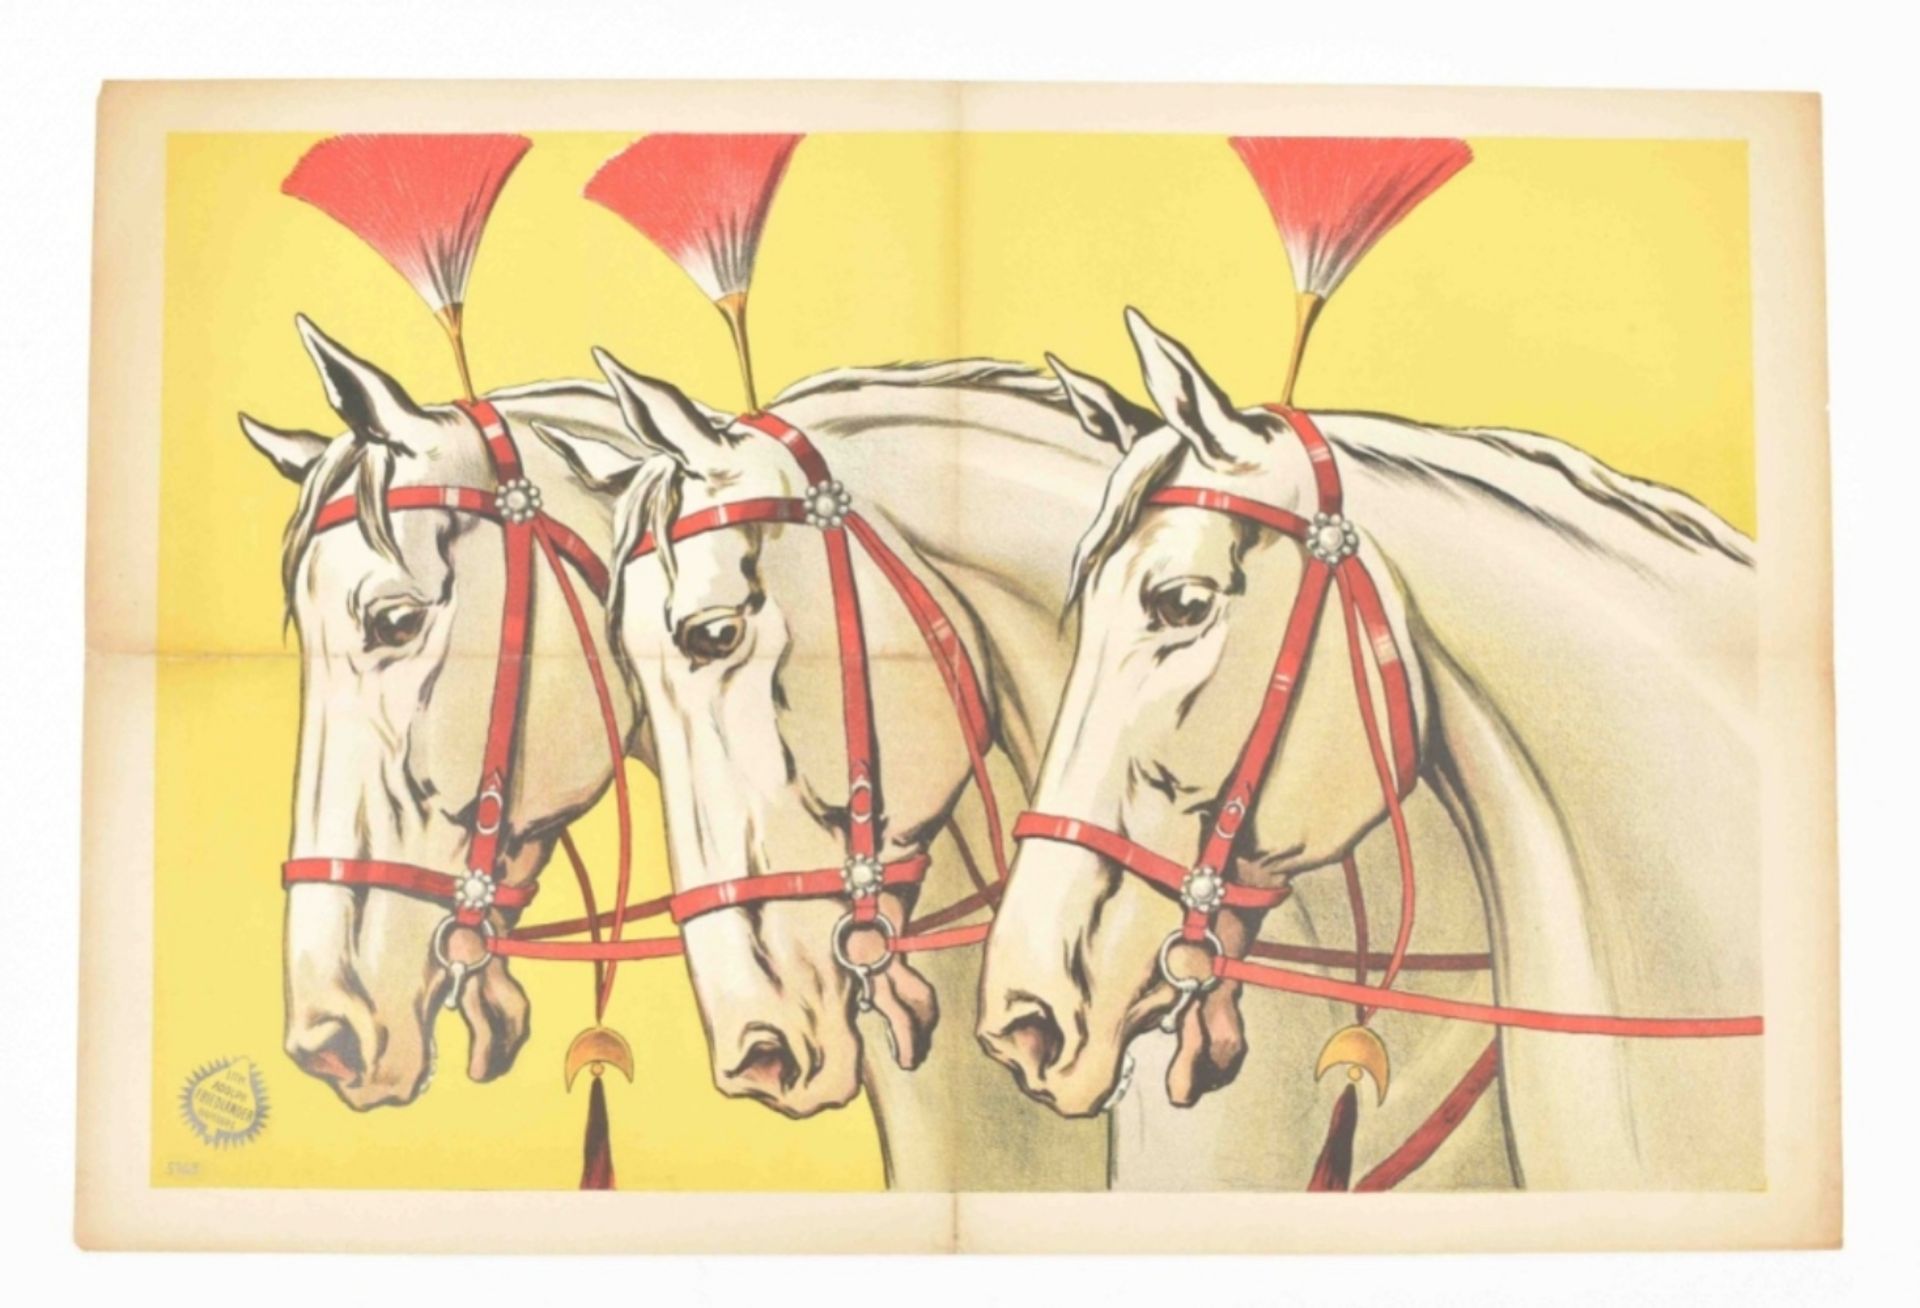 [Animal Dressage] [Horses] "Three horses with decorative bridle" Friedländer, Hamburg, 1913